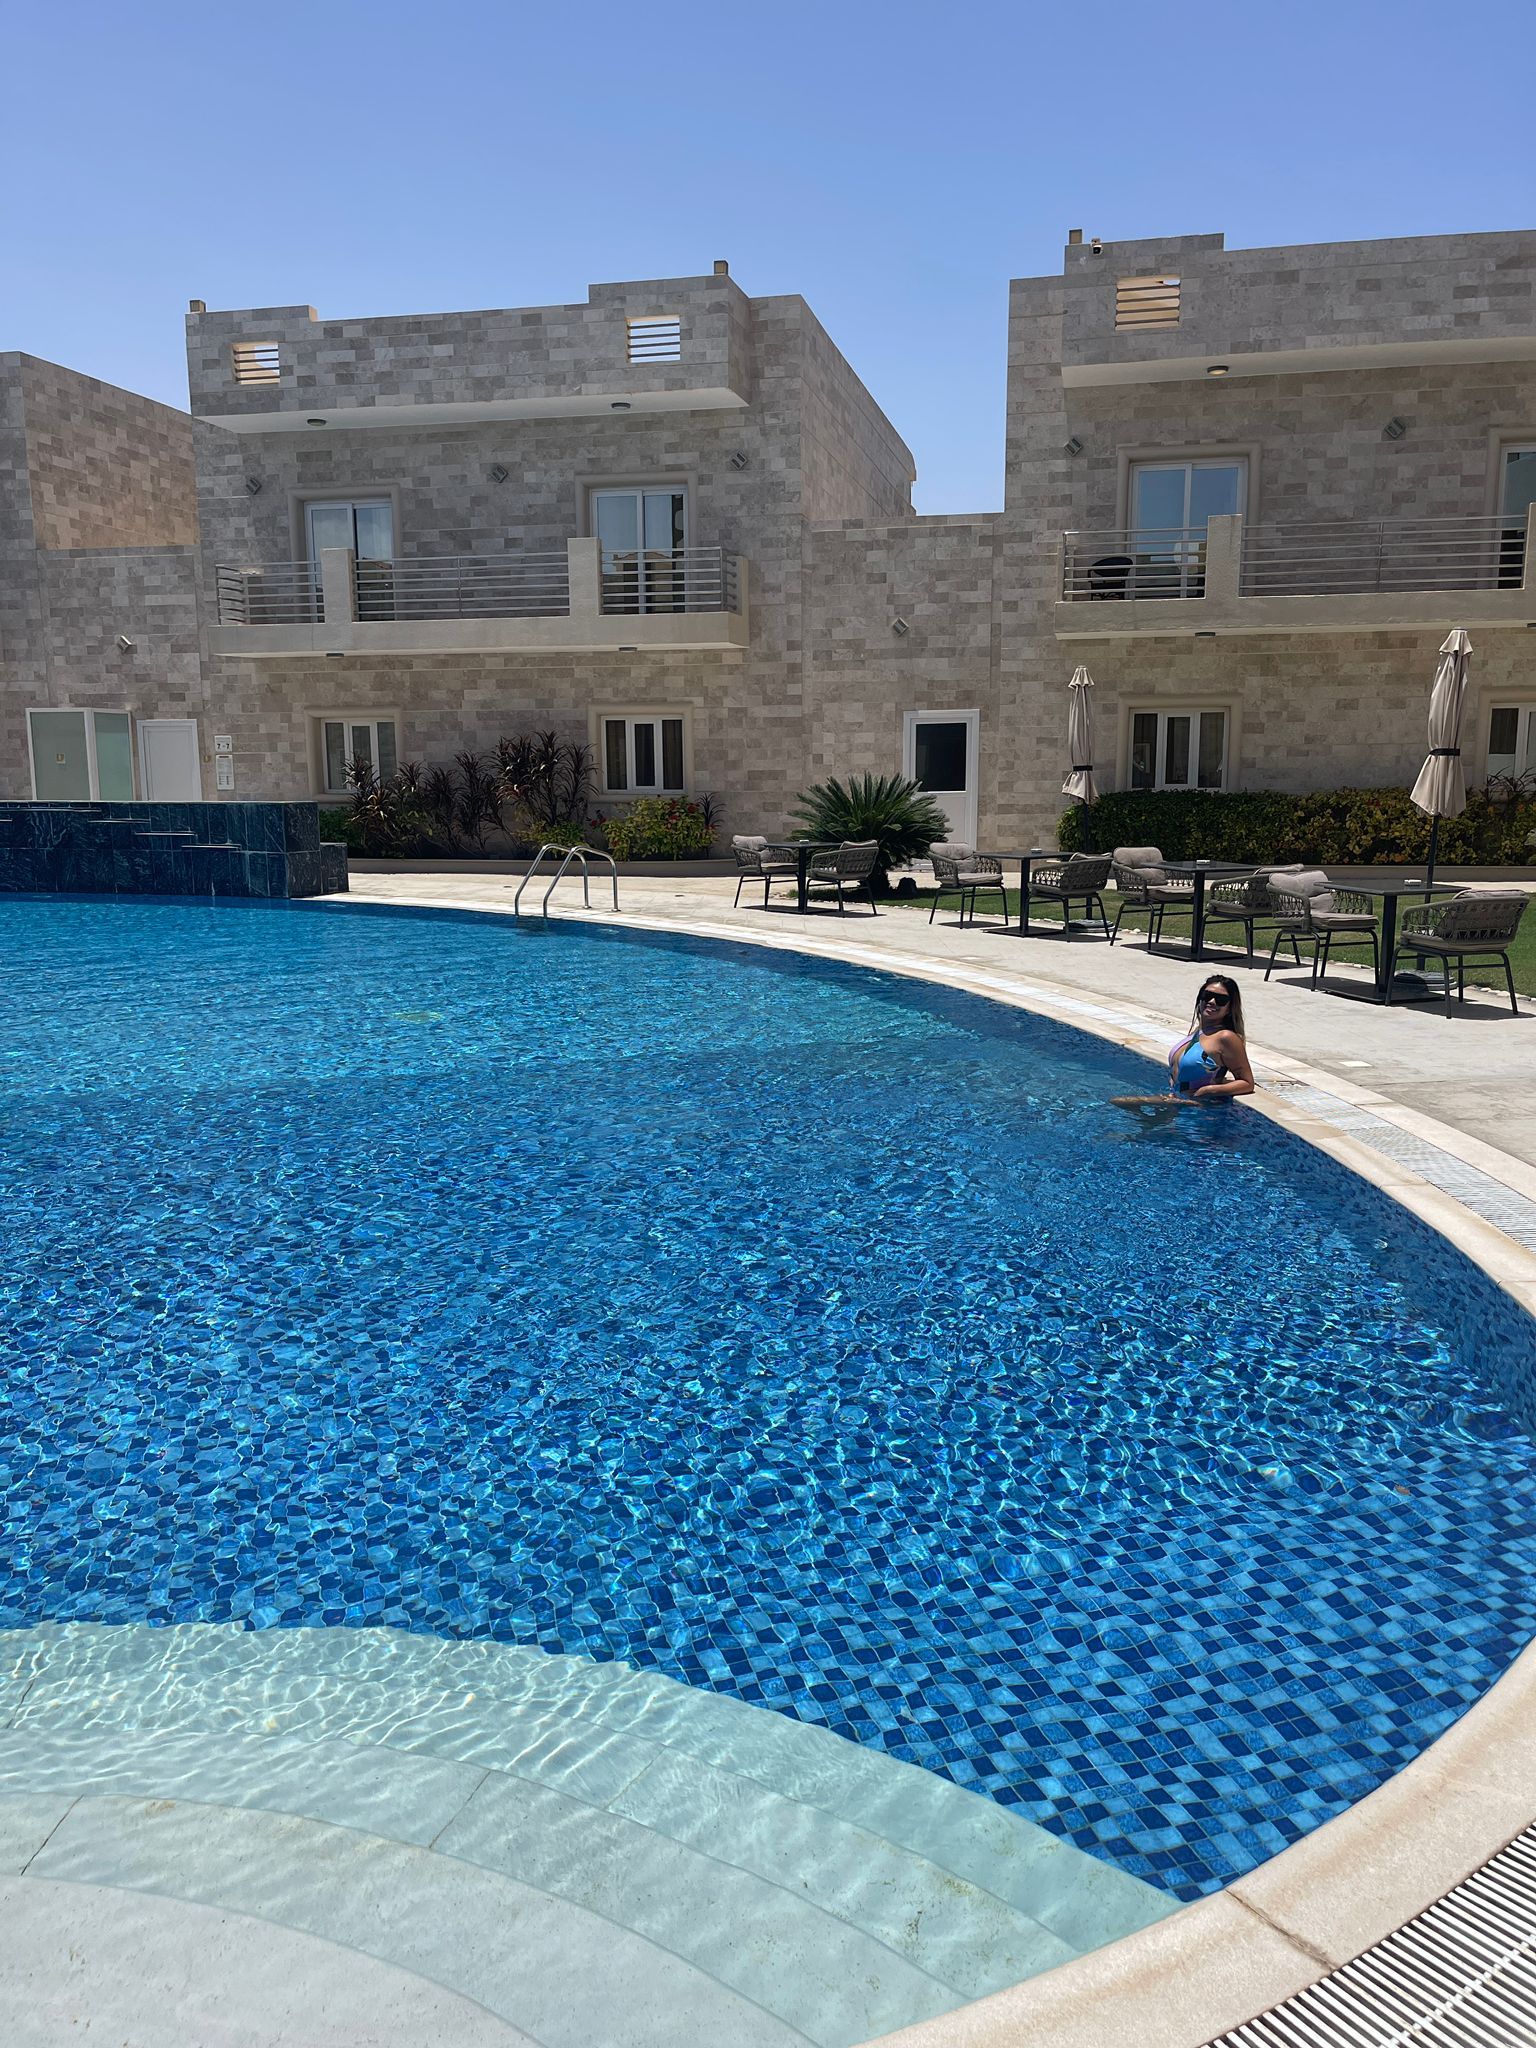 Belad Bont Resort is the first of its kind in Salalah, Oman